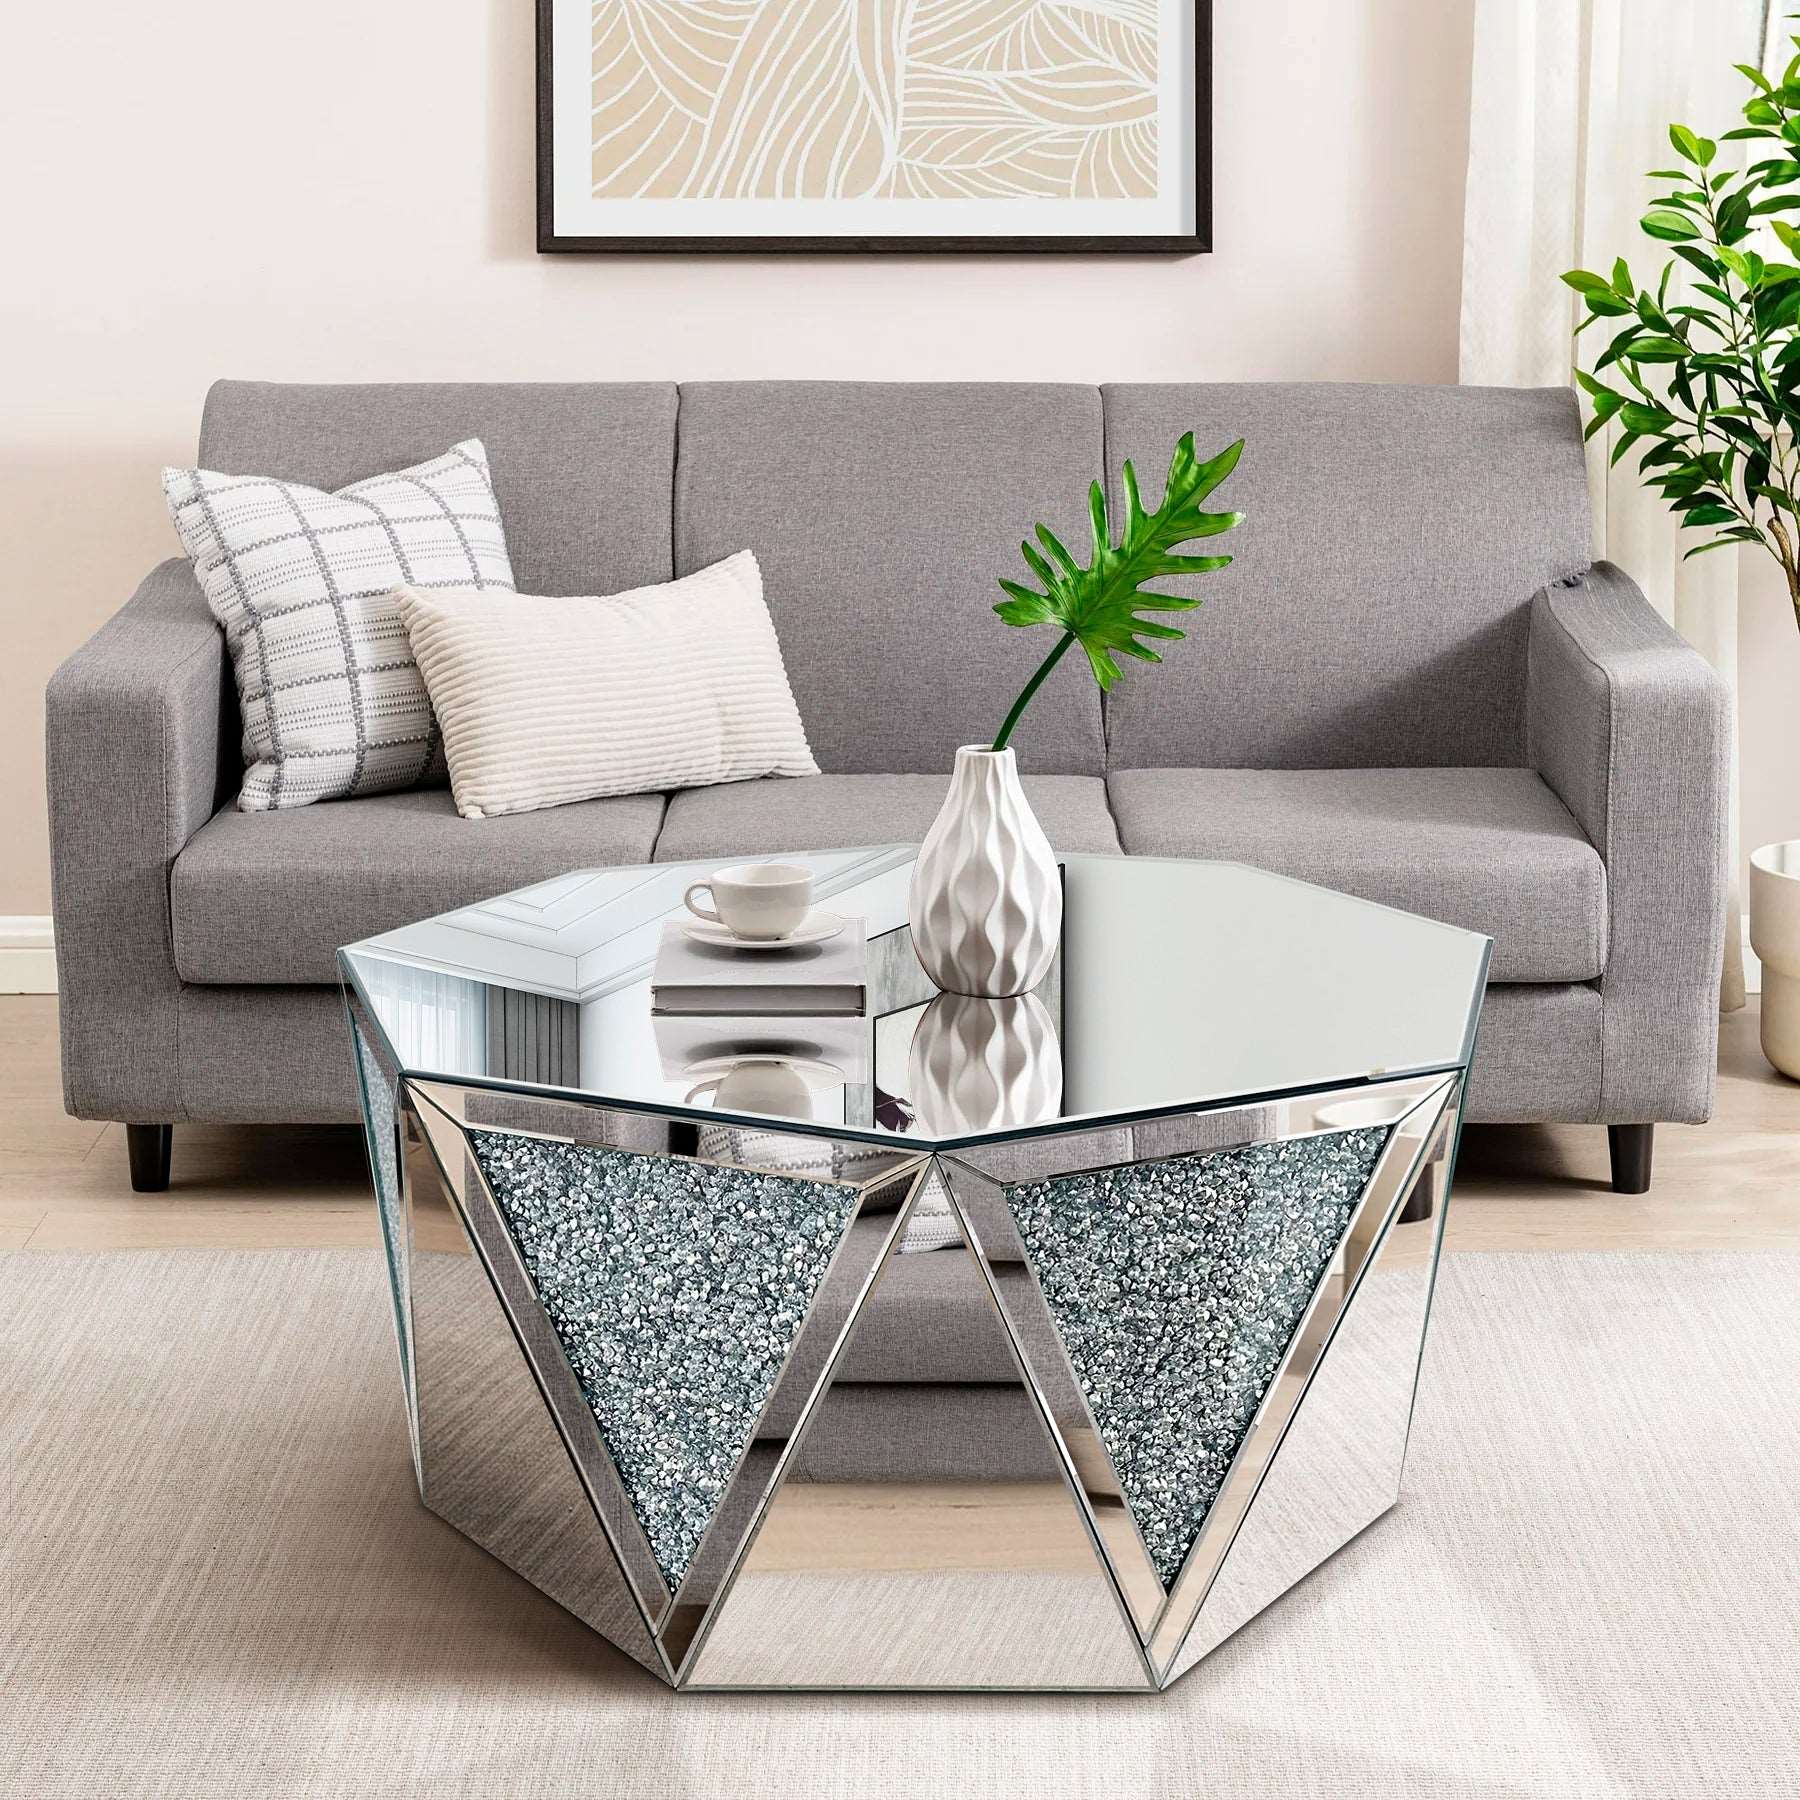 Special Shape Diamond Art Table Decor for Home Office Table Decor (#3)